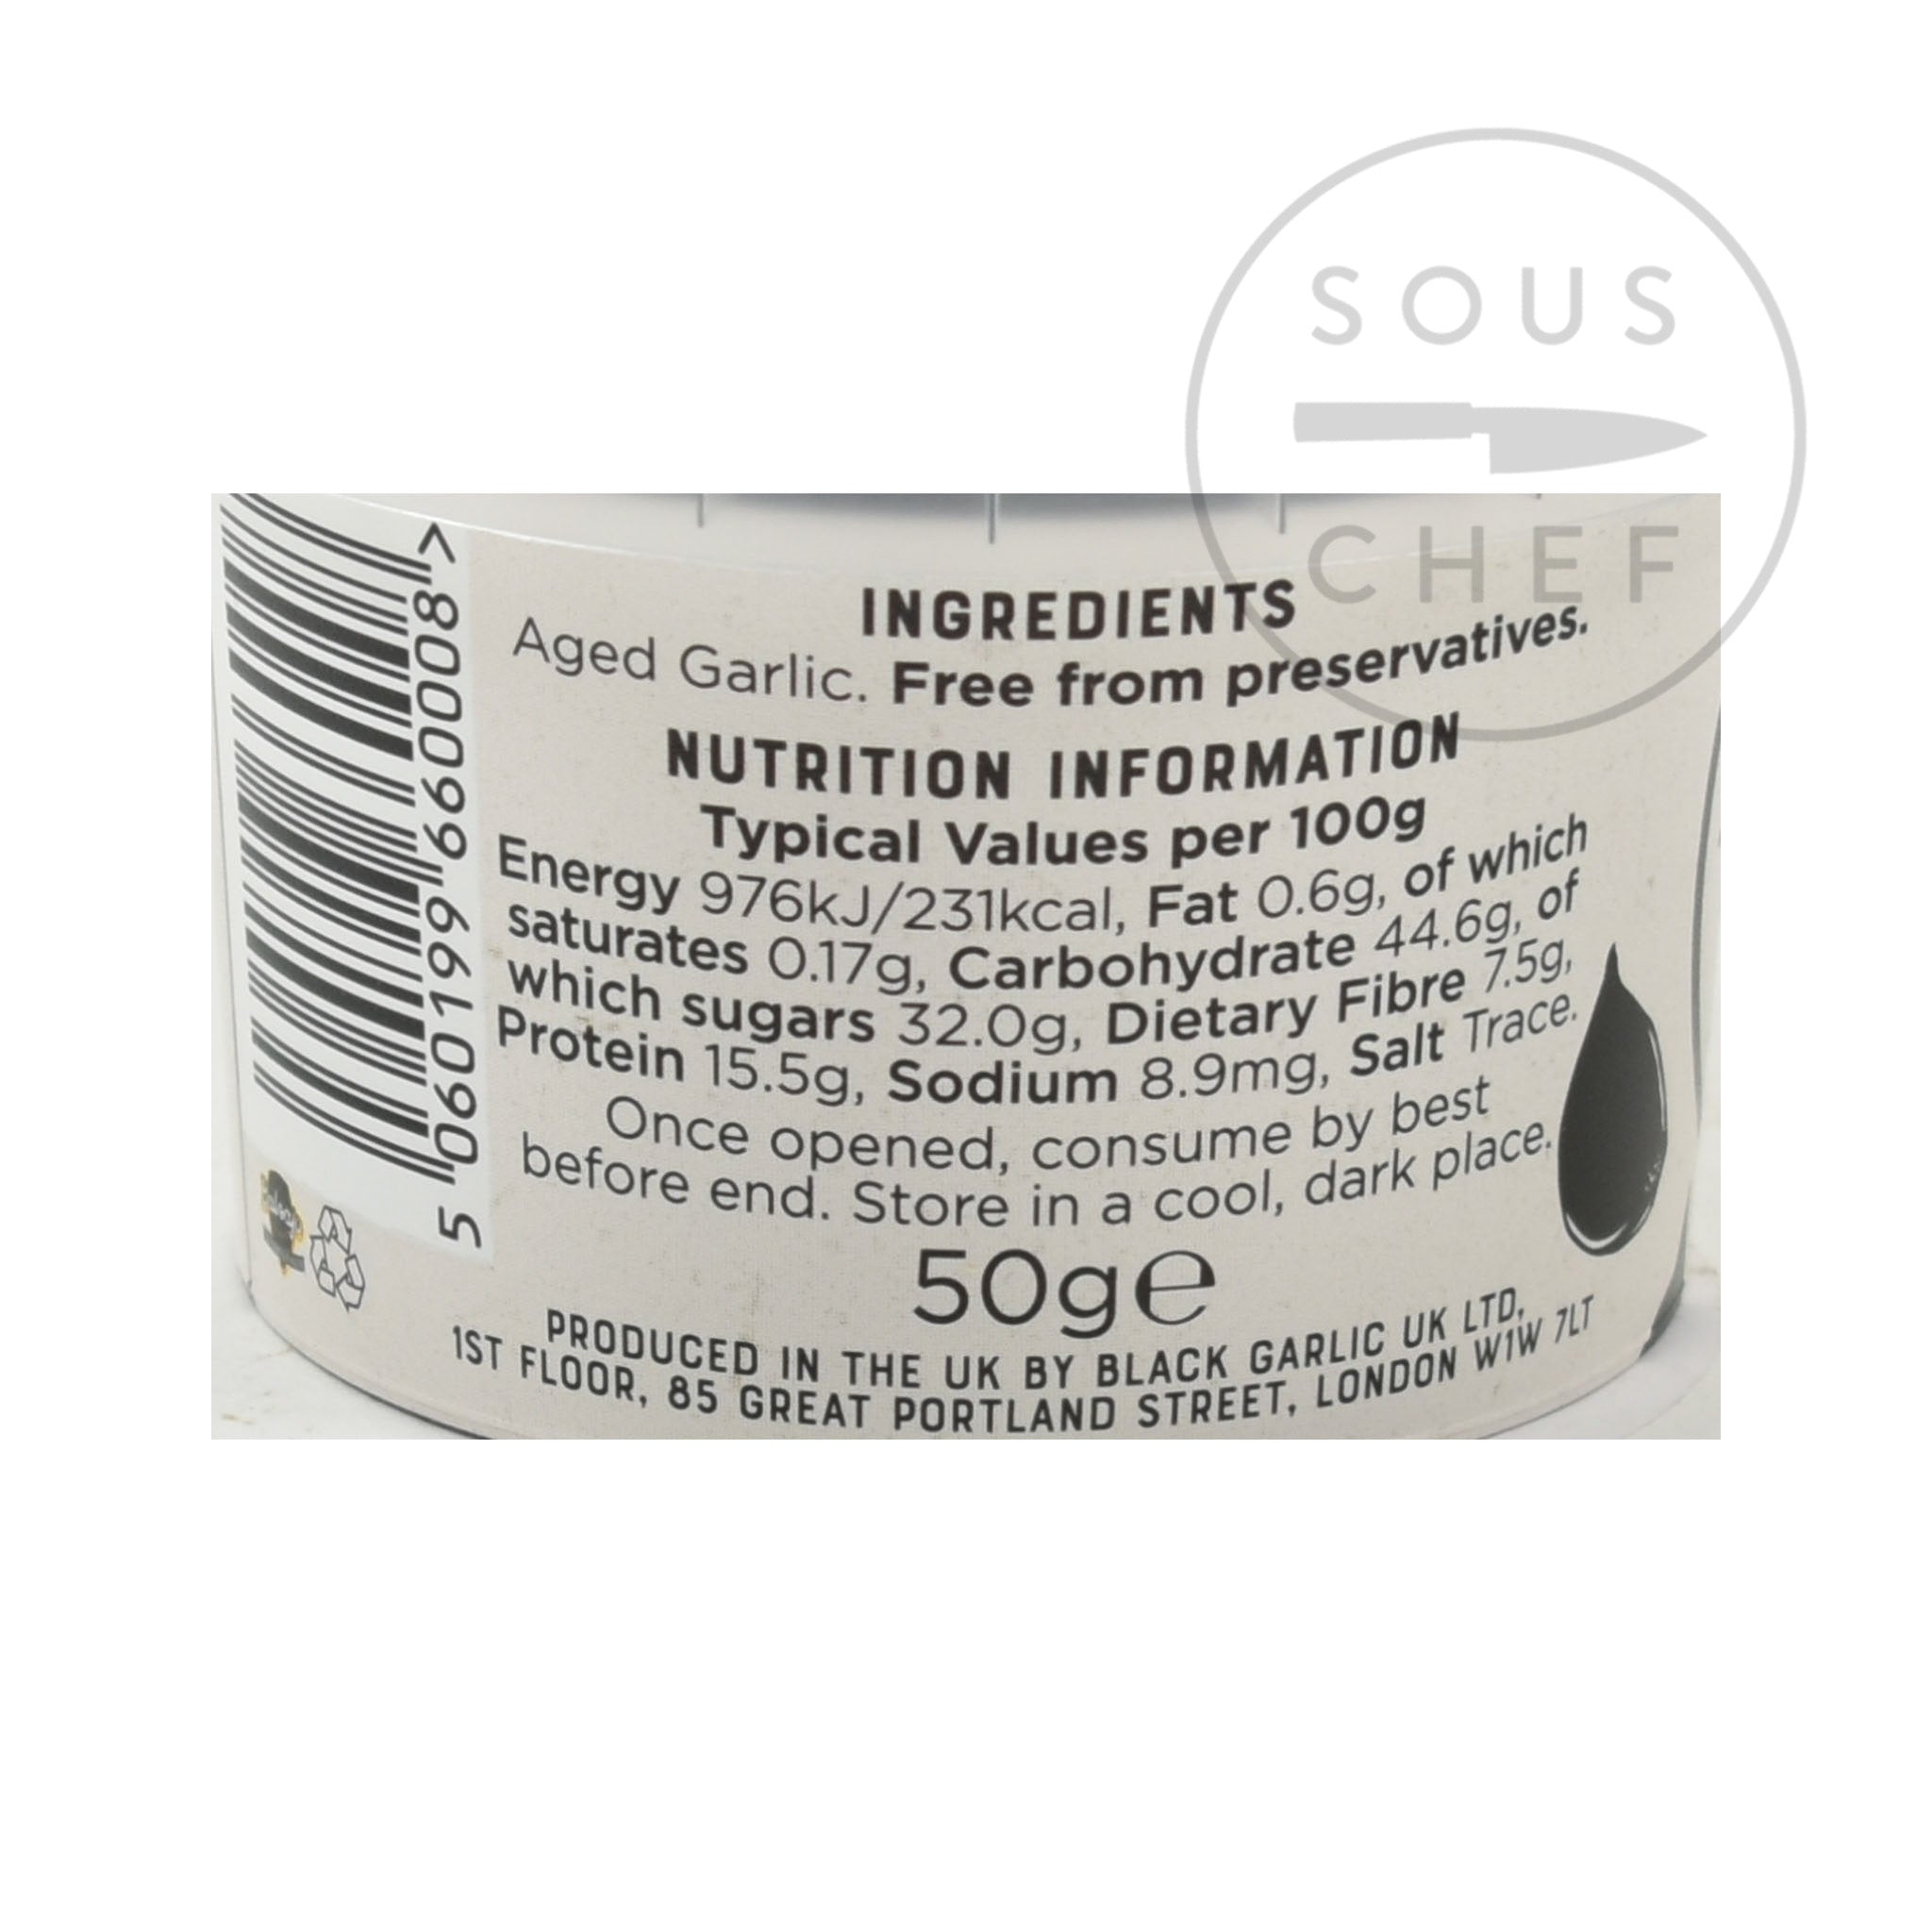 Black Garlic Cloves 50g nutritional information ingredients